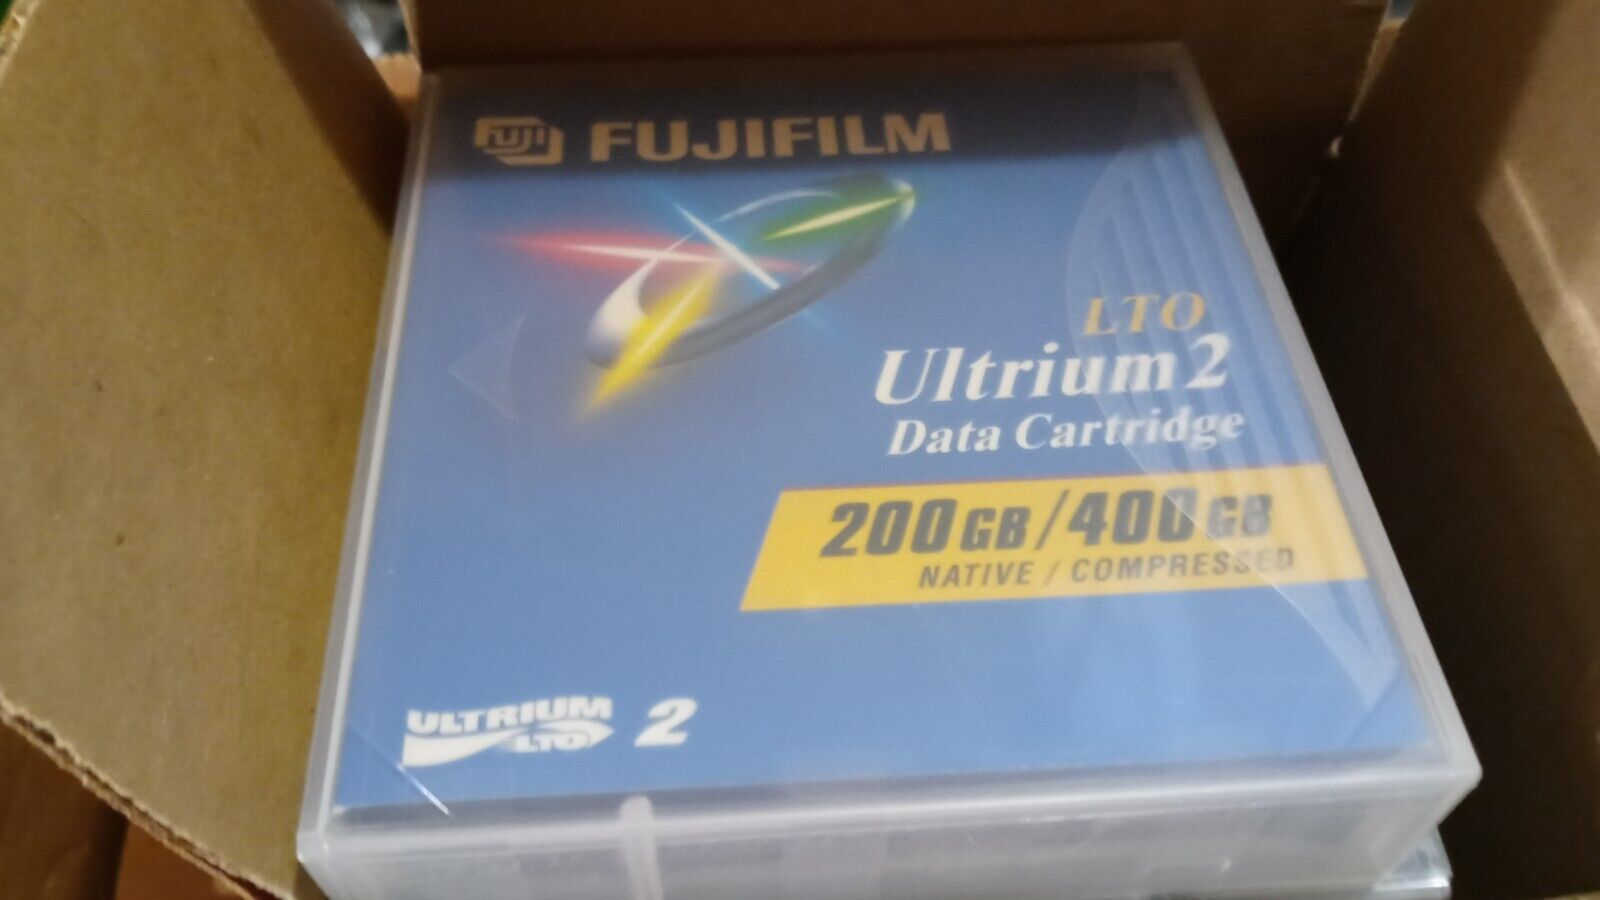 Fujifilm Lto Ultrium2 Data Cartridge 200GB/400GB - 5 PACK, FAST SHIPPING